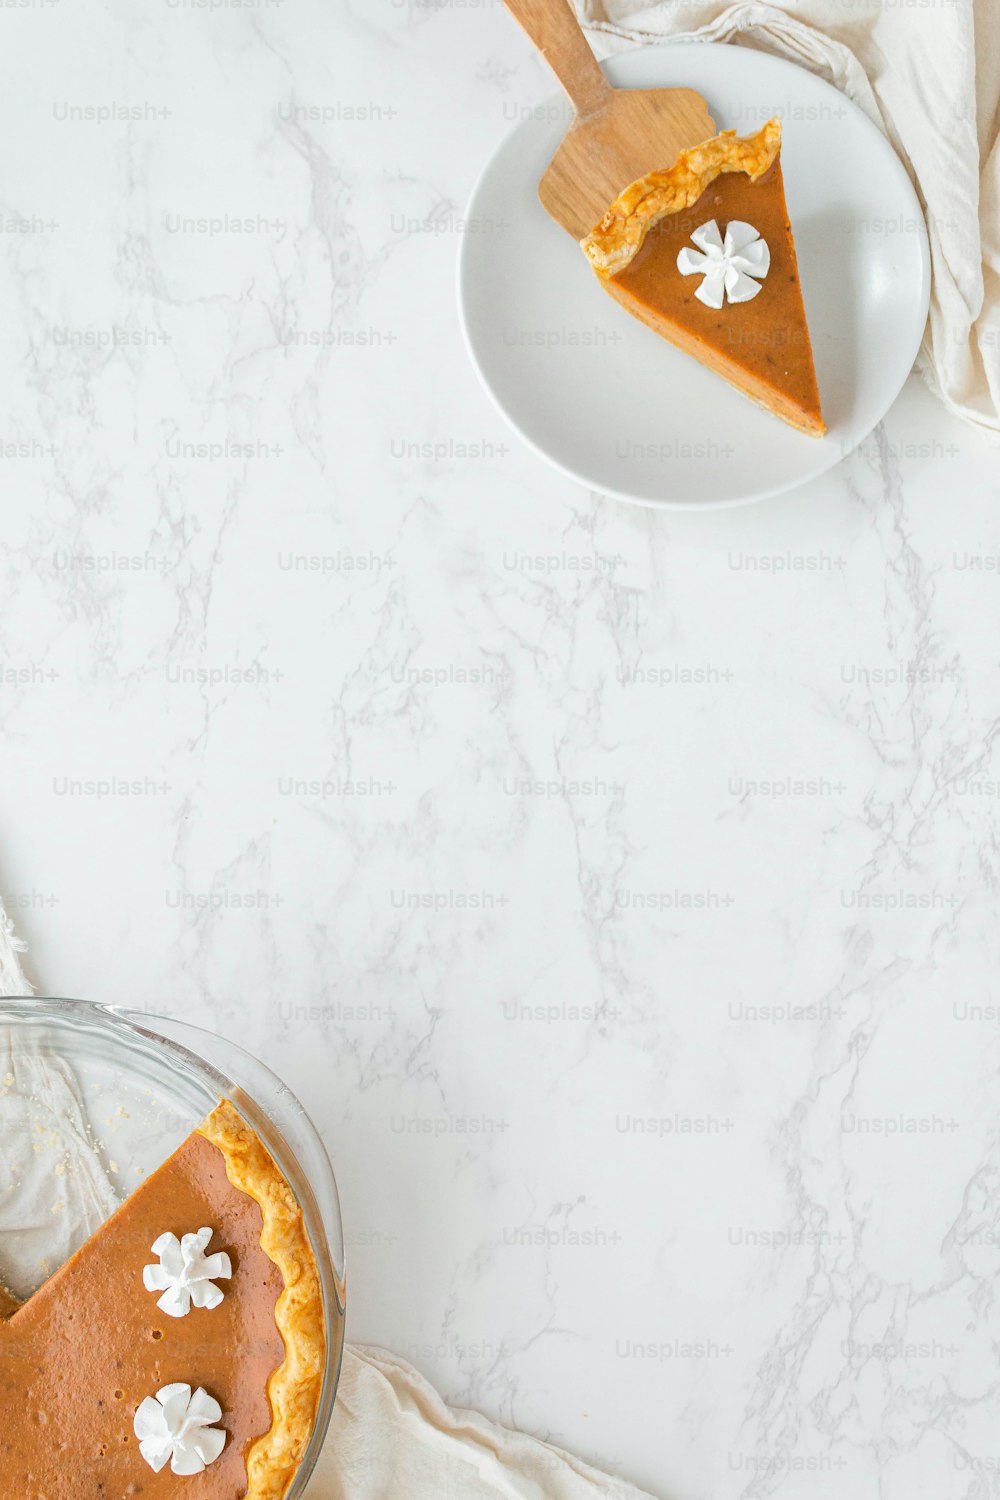 a slice of pumpkin pie on a white plate